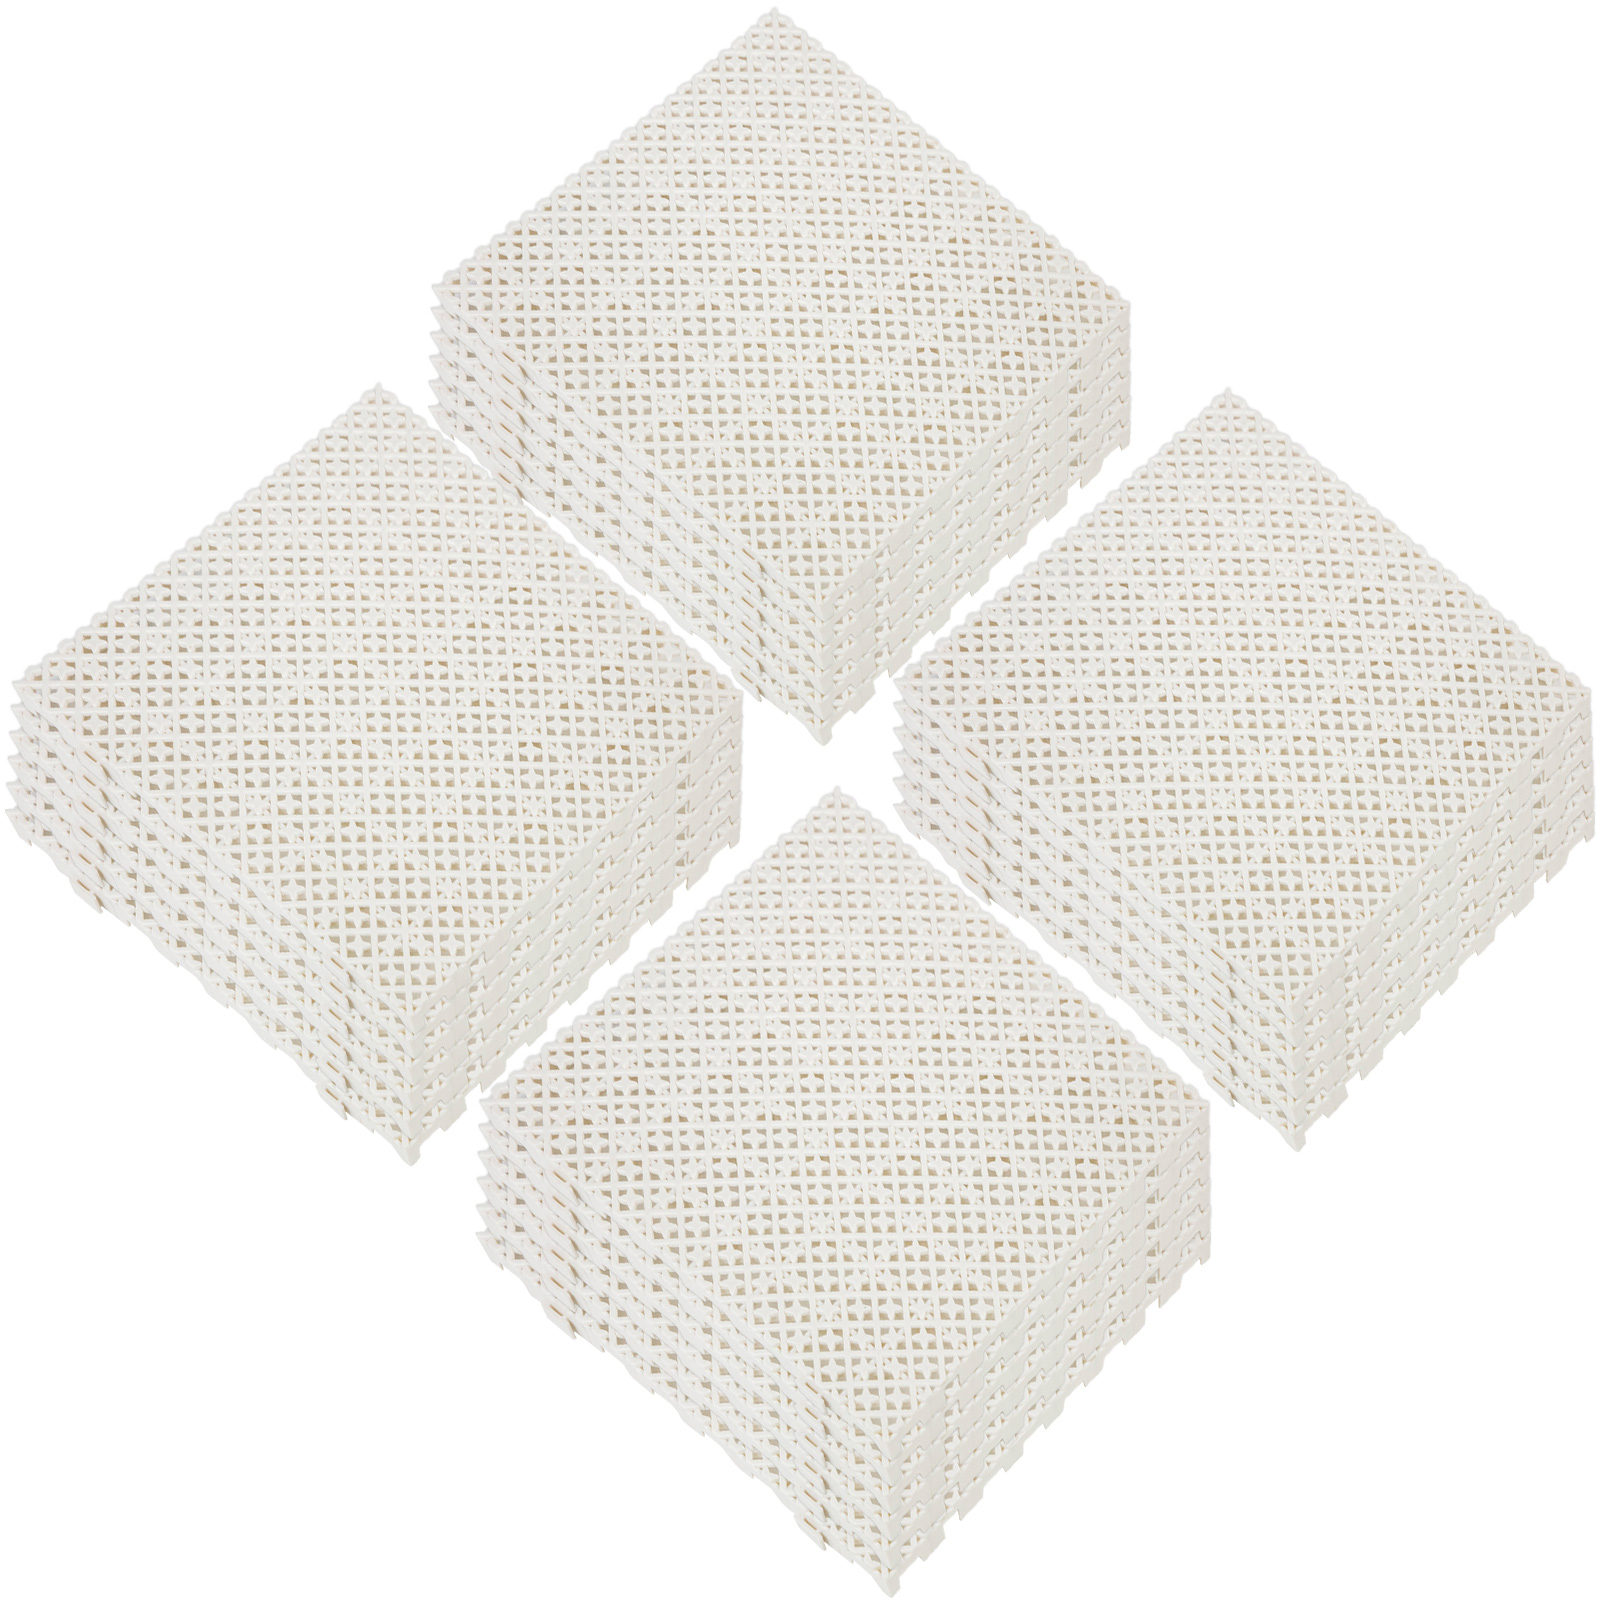 Rubber Tiles Interlockinggarage Floor Tiles11.8x11.8x0.5 Inch 25 Pcs Deck Tile от Vevor Many GEOs